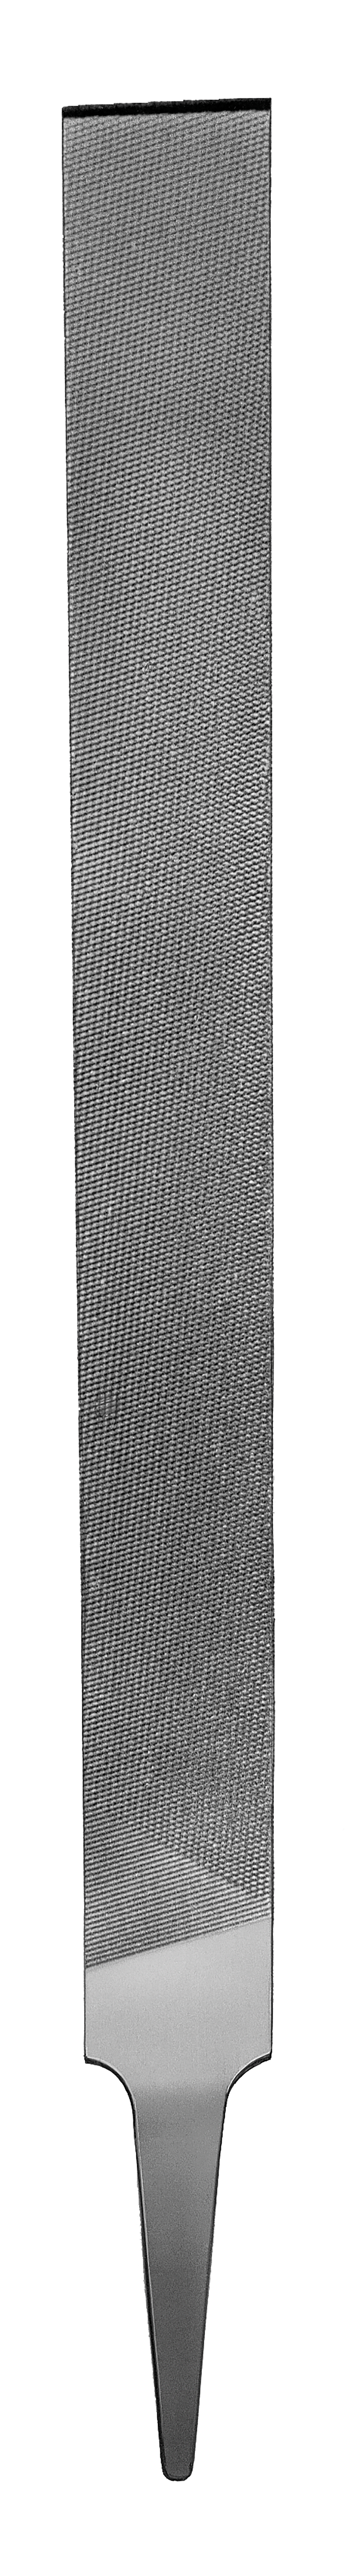 Foto of  Werkplaatsvijlen conform DIN 7261, vorm F, keep 2, 200 mm 